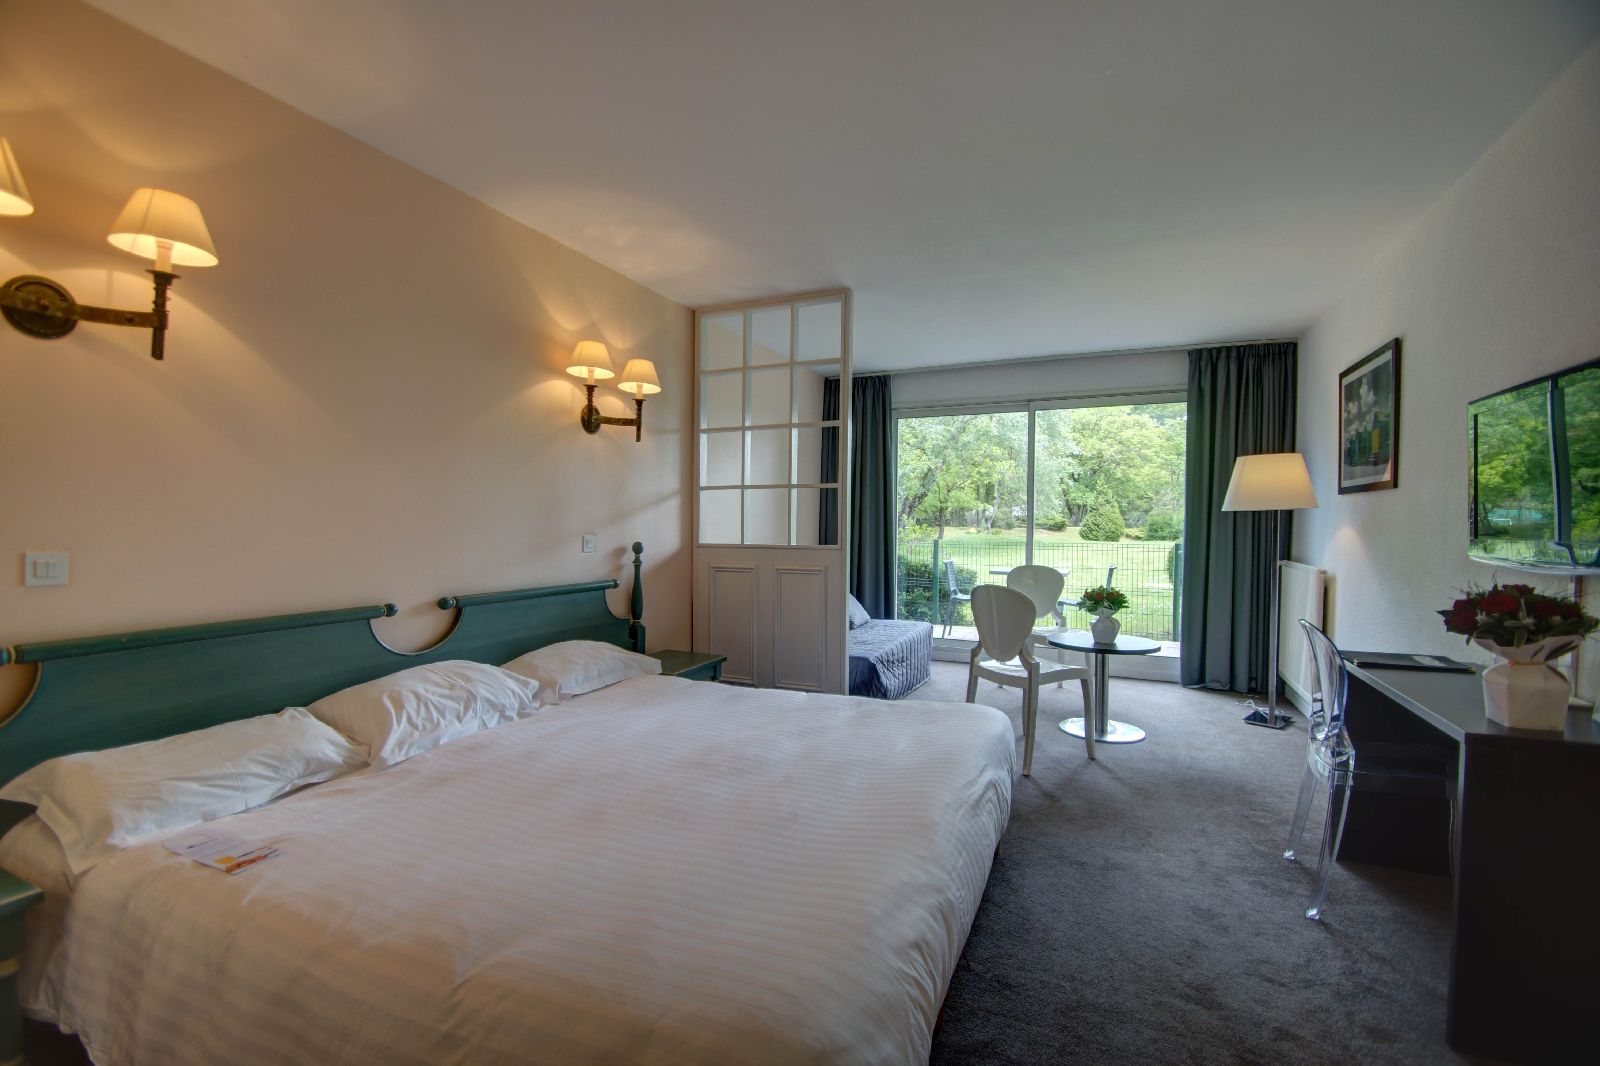 golf-expedition-golf-reizen-frankrijk-regio-pas-de-calais-hotel-du-parc-modern-ingerichte-slaapkamer-wit-balkon.jpg